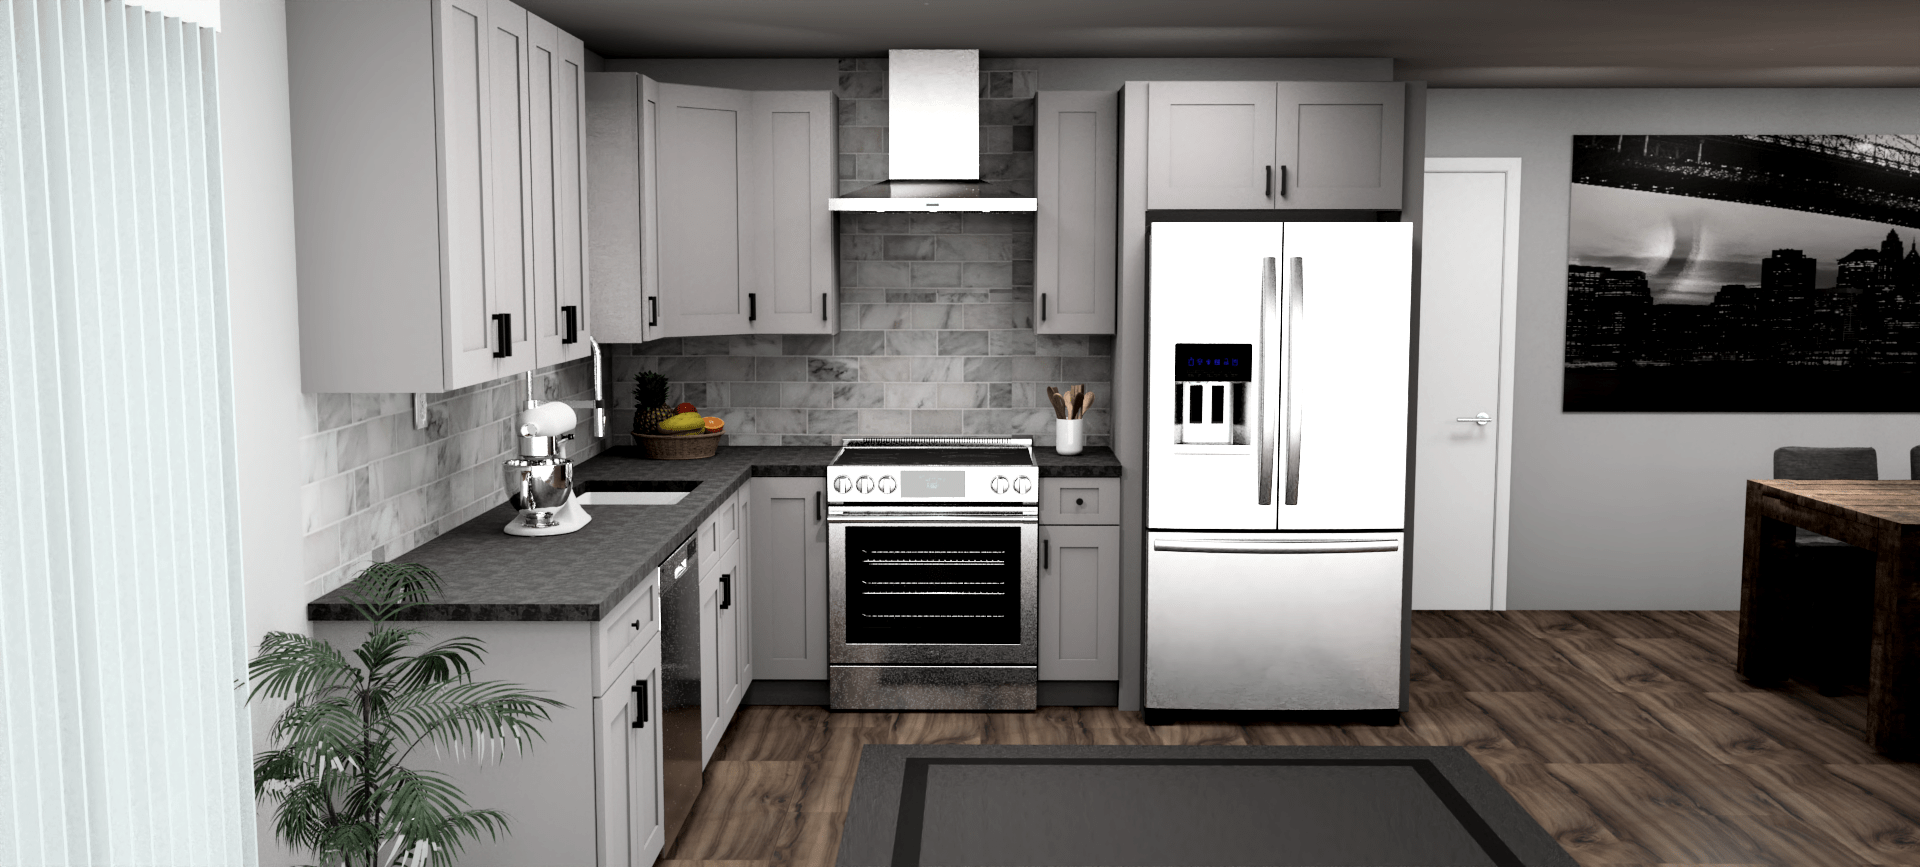 Fabuwood Allure Galaxy Nickel 10 x 10 L Shaped Kitchen Front Layout Photo